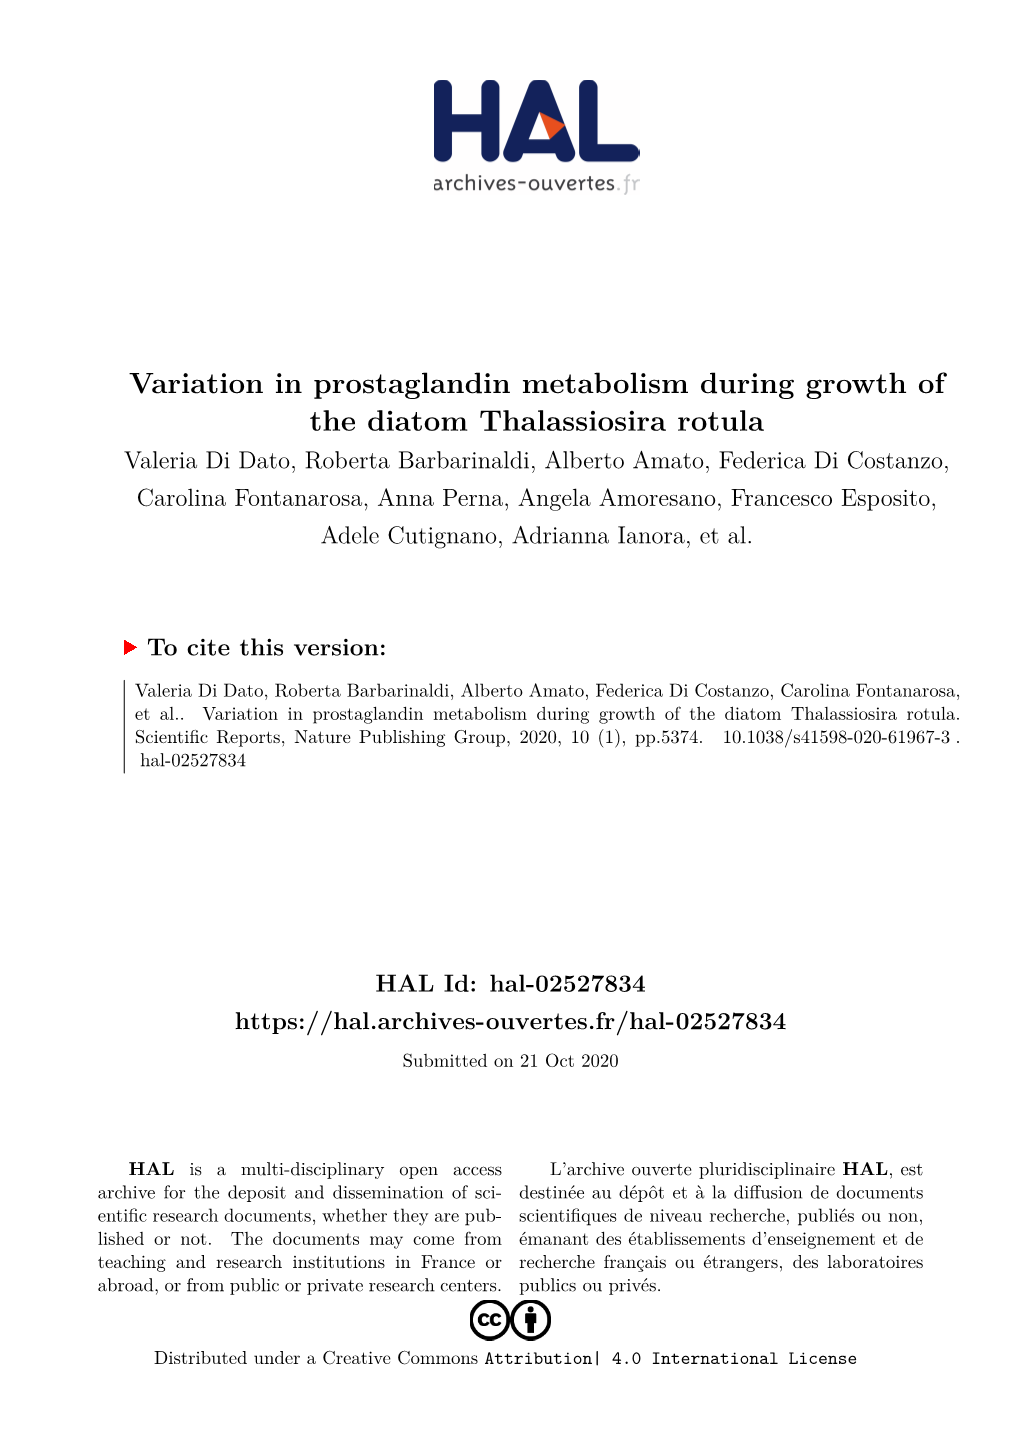 Variation in Prostaglandin Metabolism During Growth of the Diatom